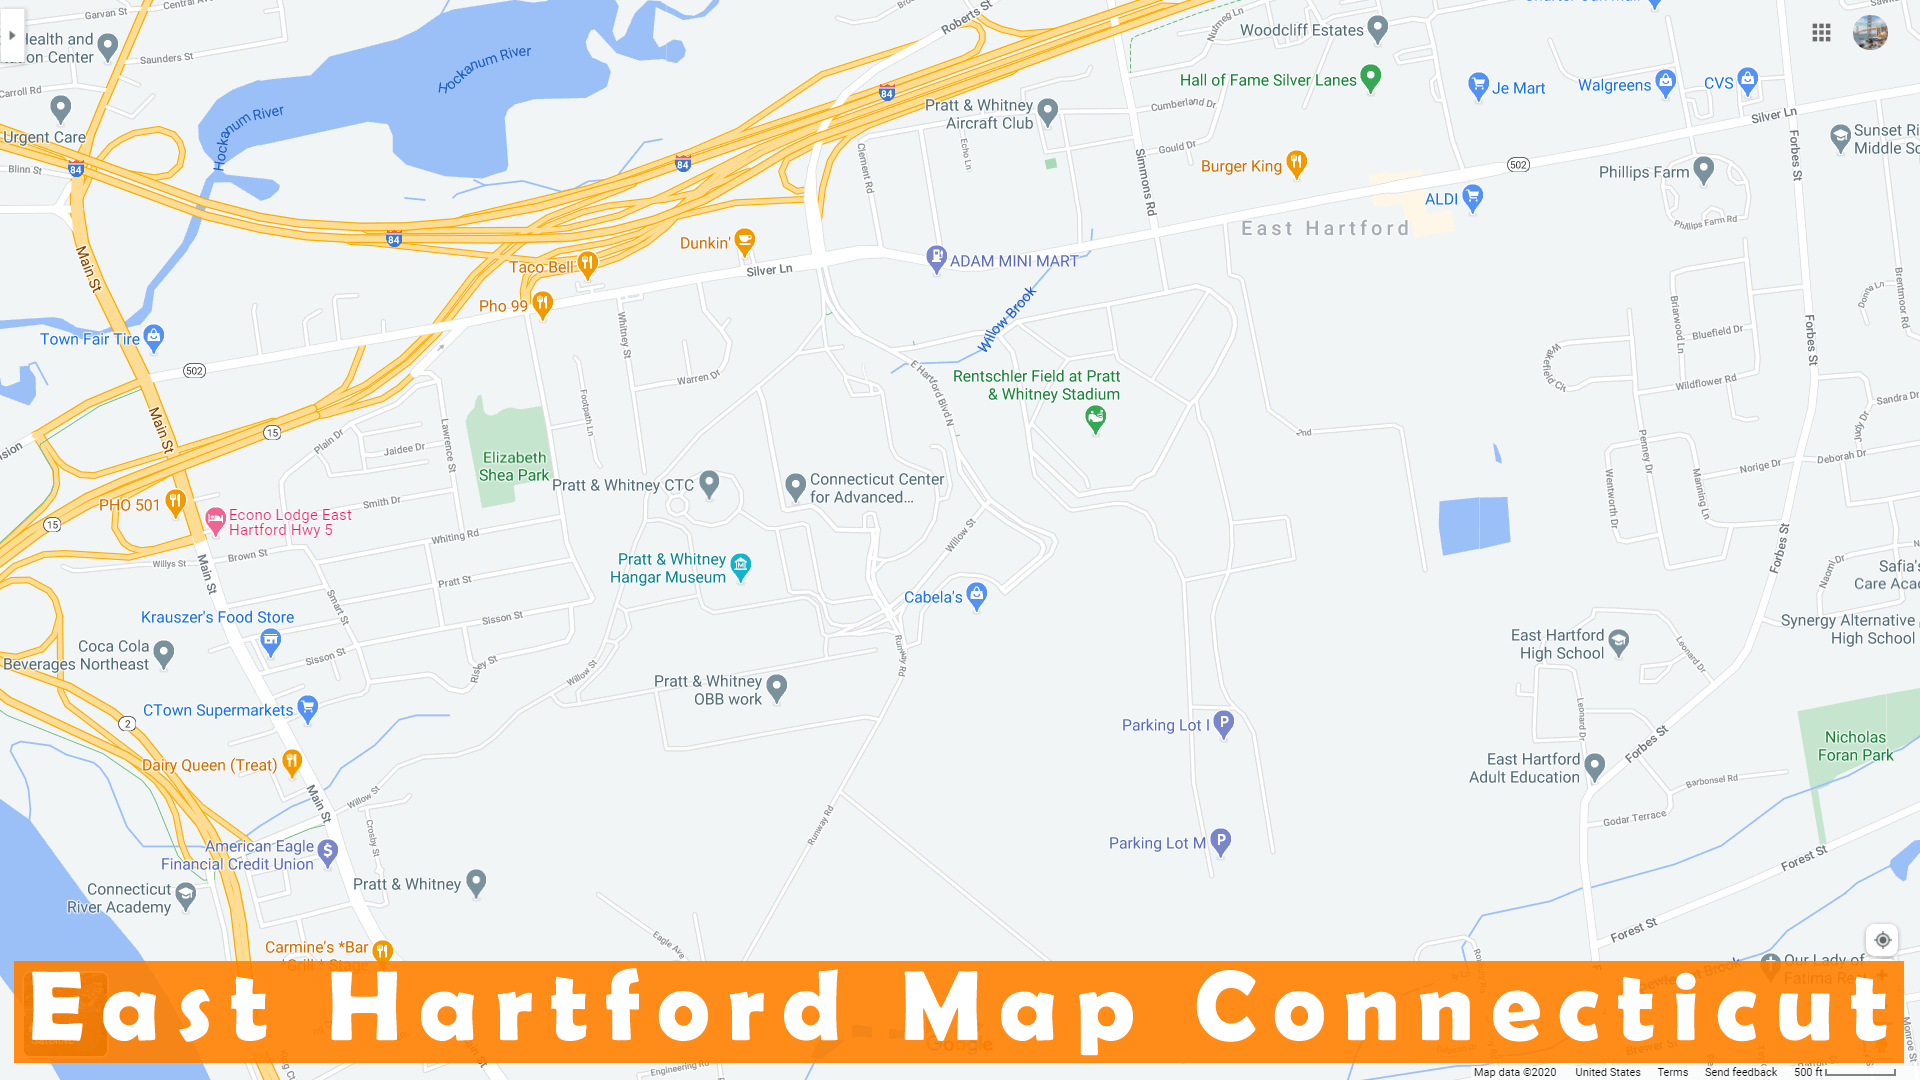 East Hartford plan